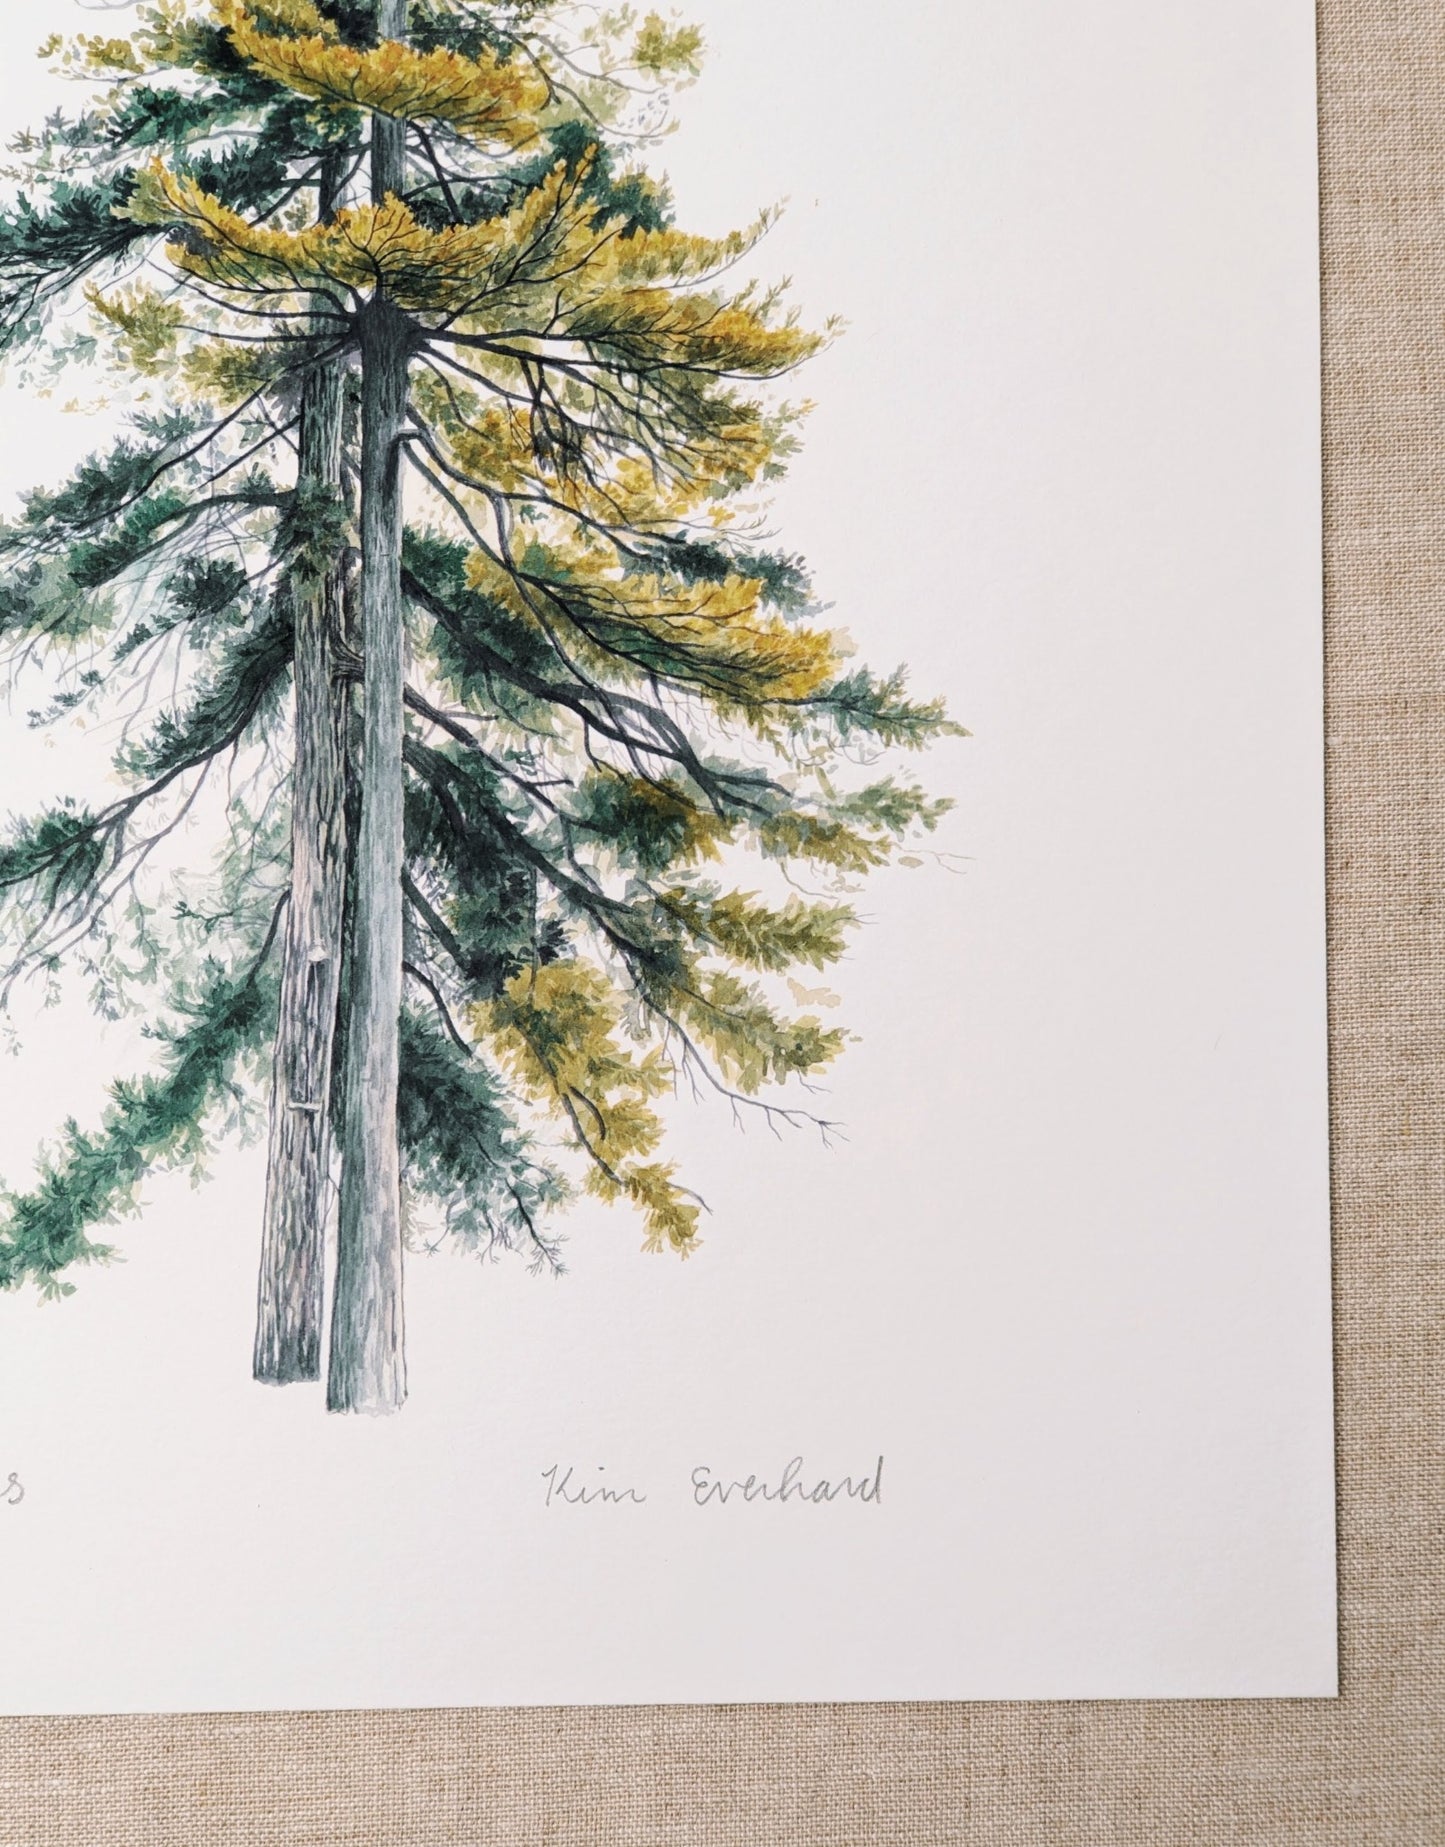 Pair of Pines - Fine Art Print - Kim Everhard Art